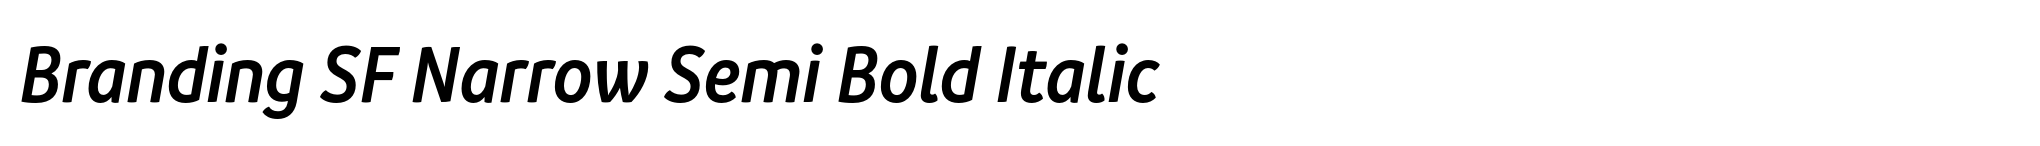 Branding SF Narrow Semi Bold Italic image